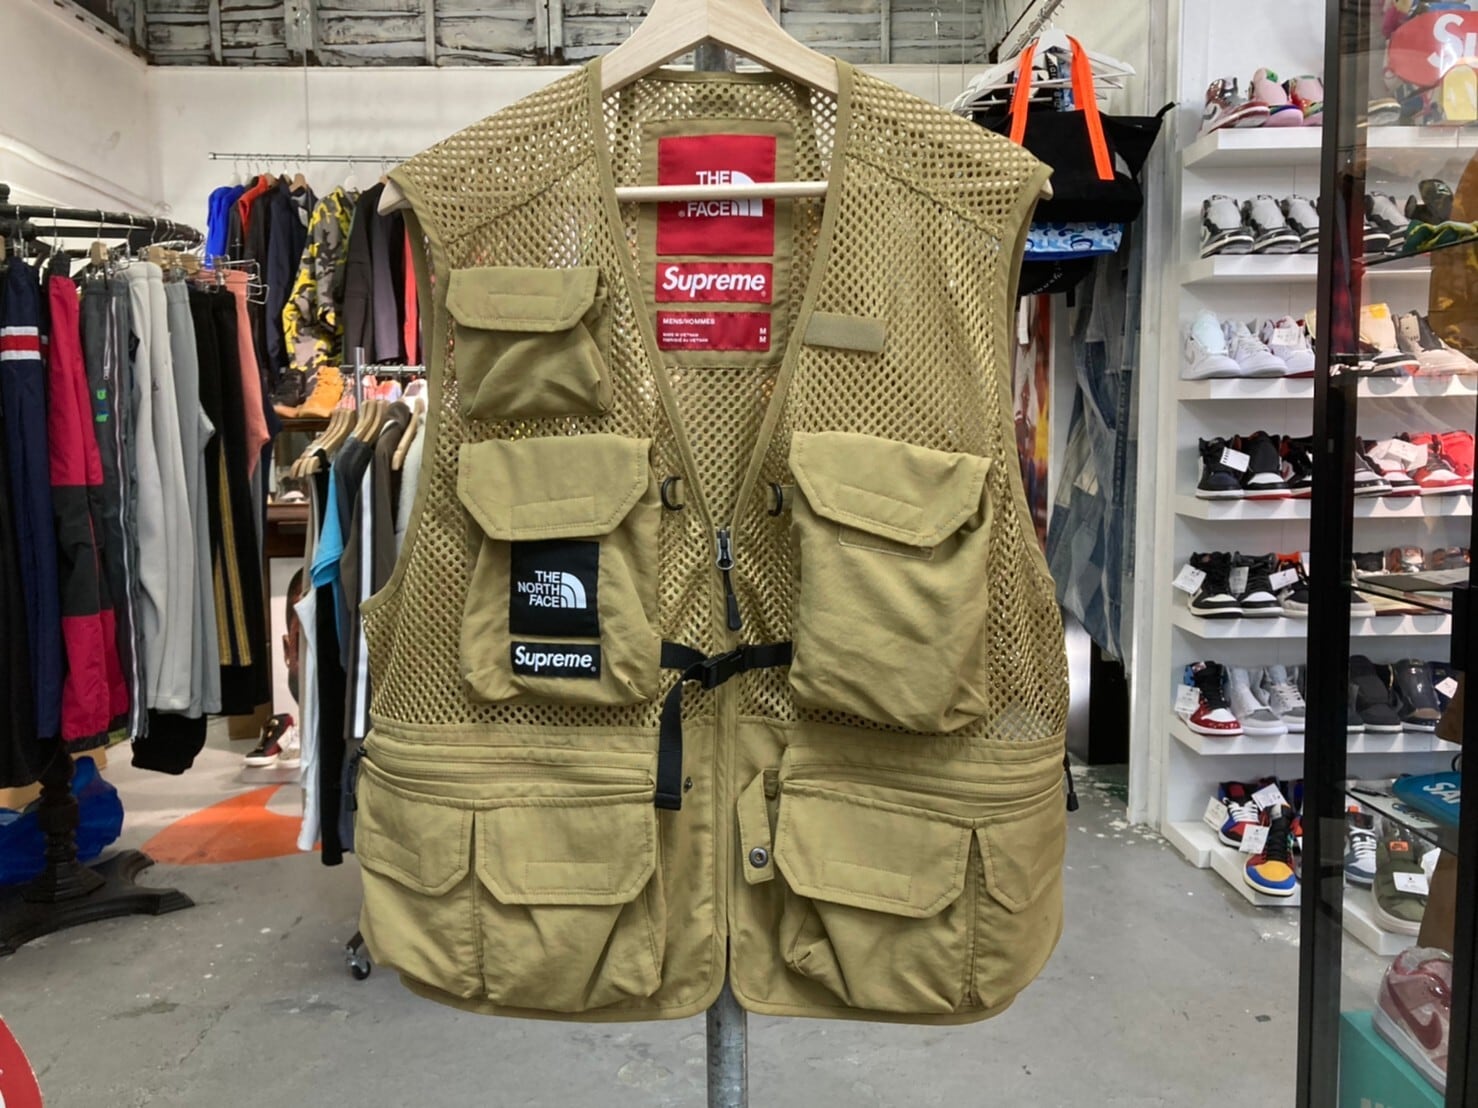 Supreme / The North Face Cargo Vest Gold